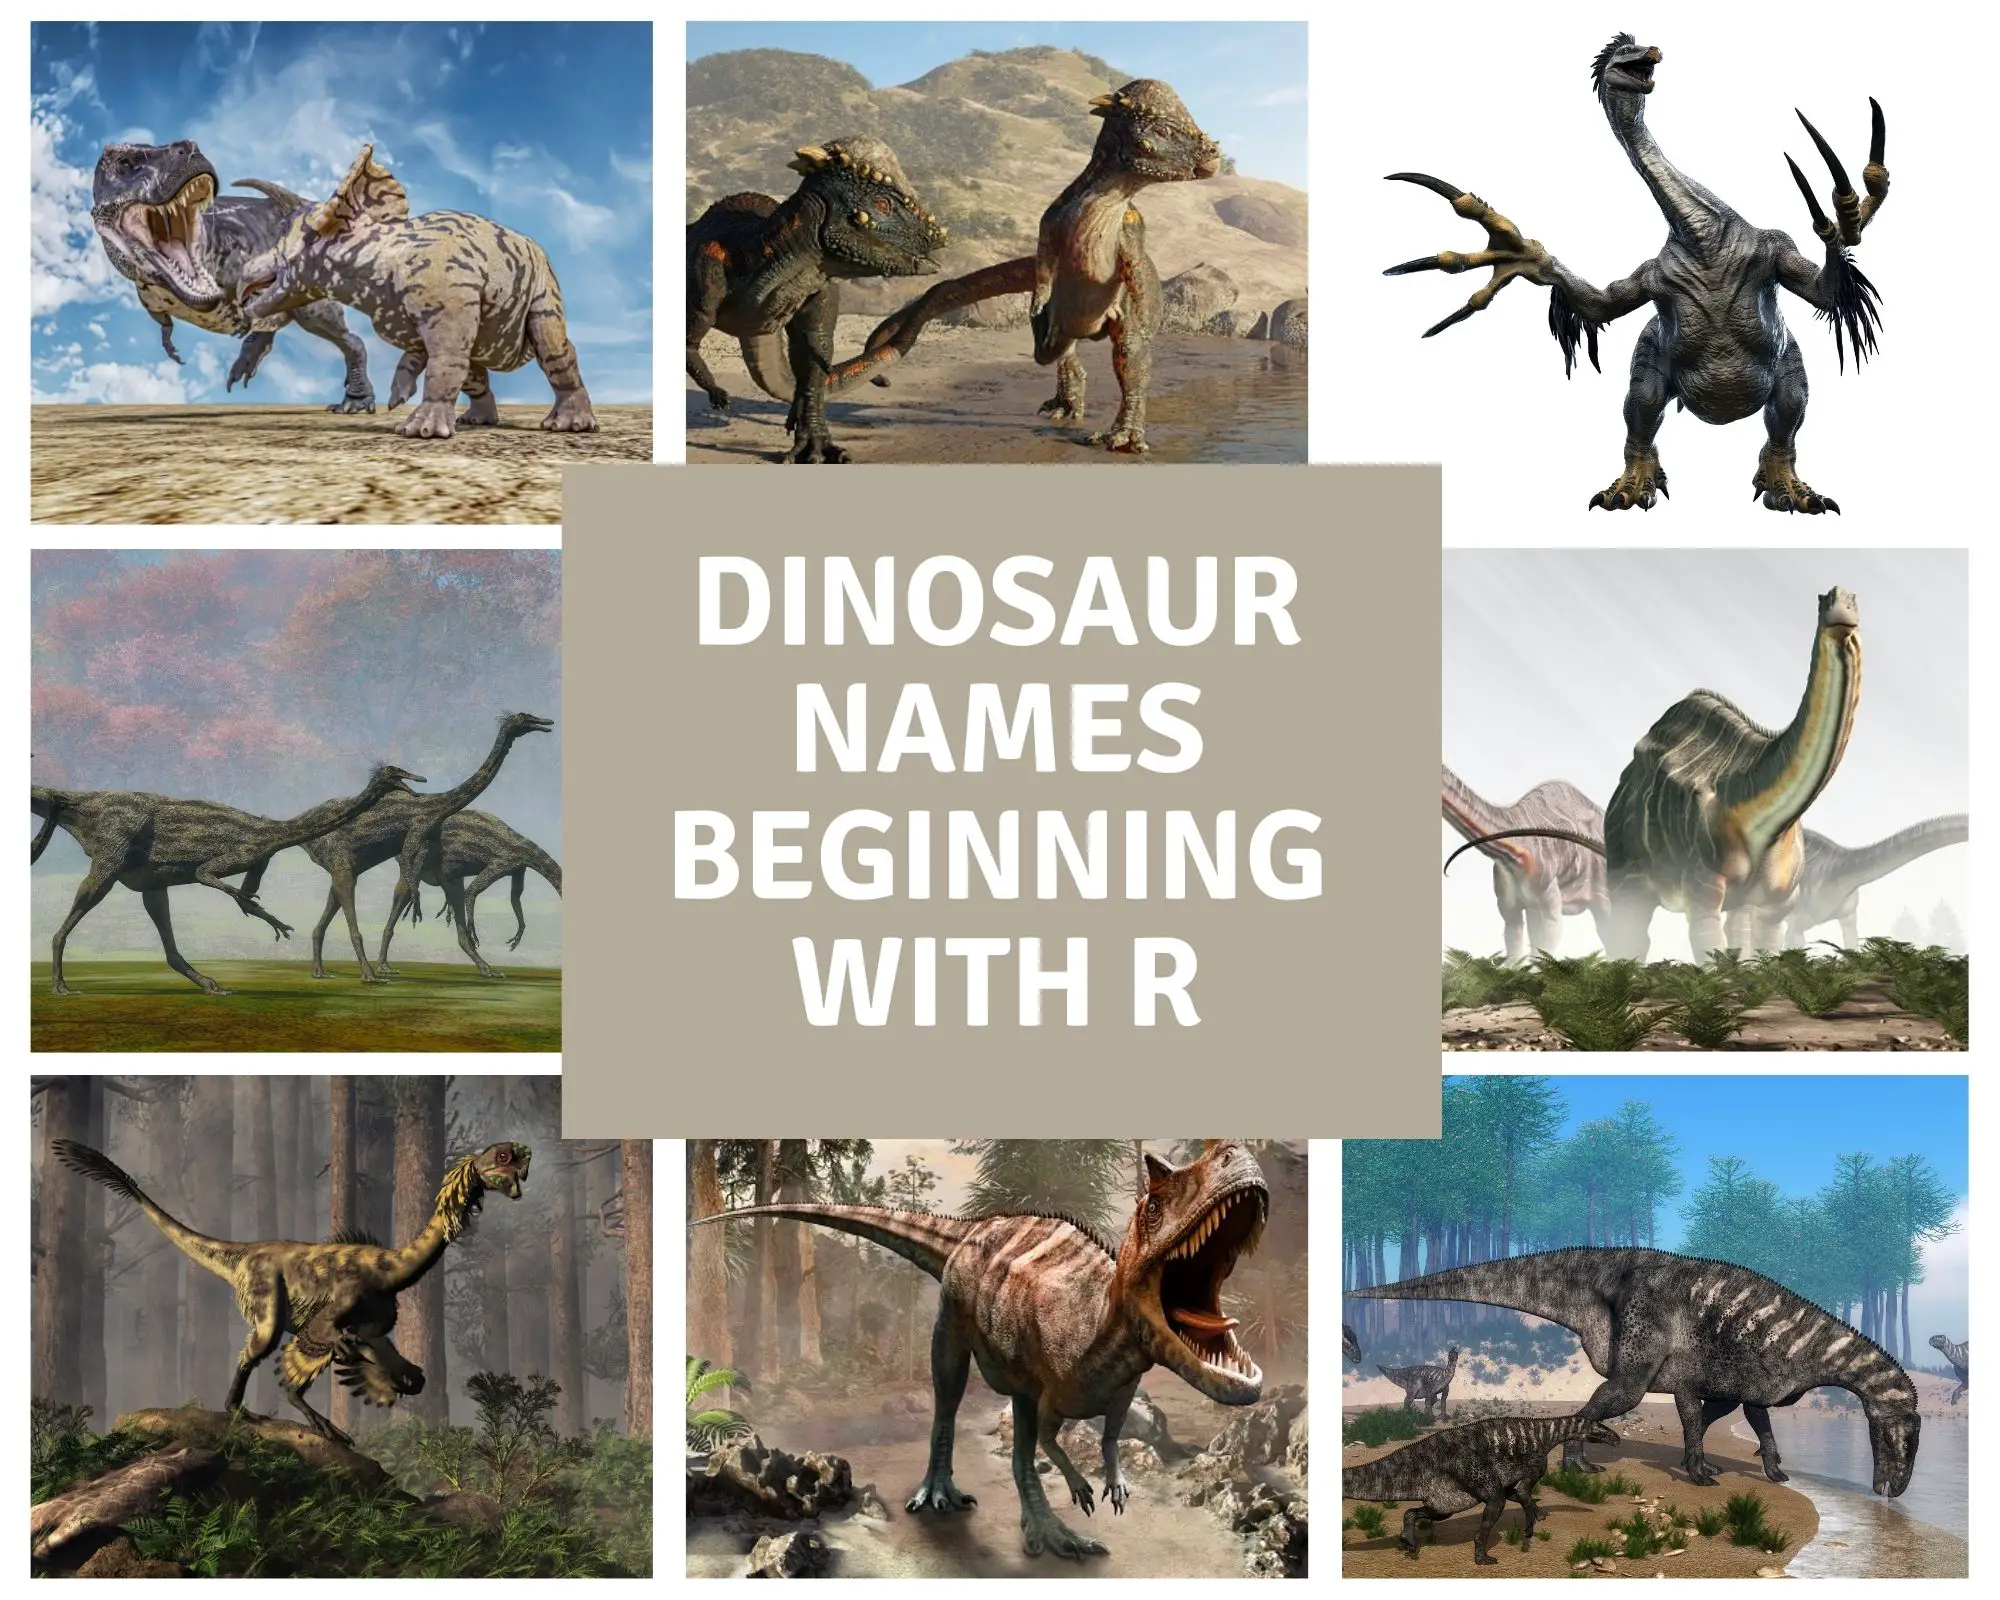 Dinosaur names beginning with r